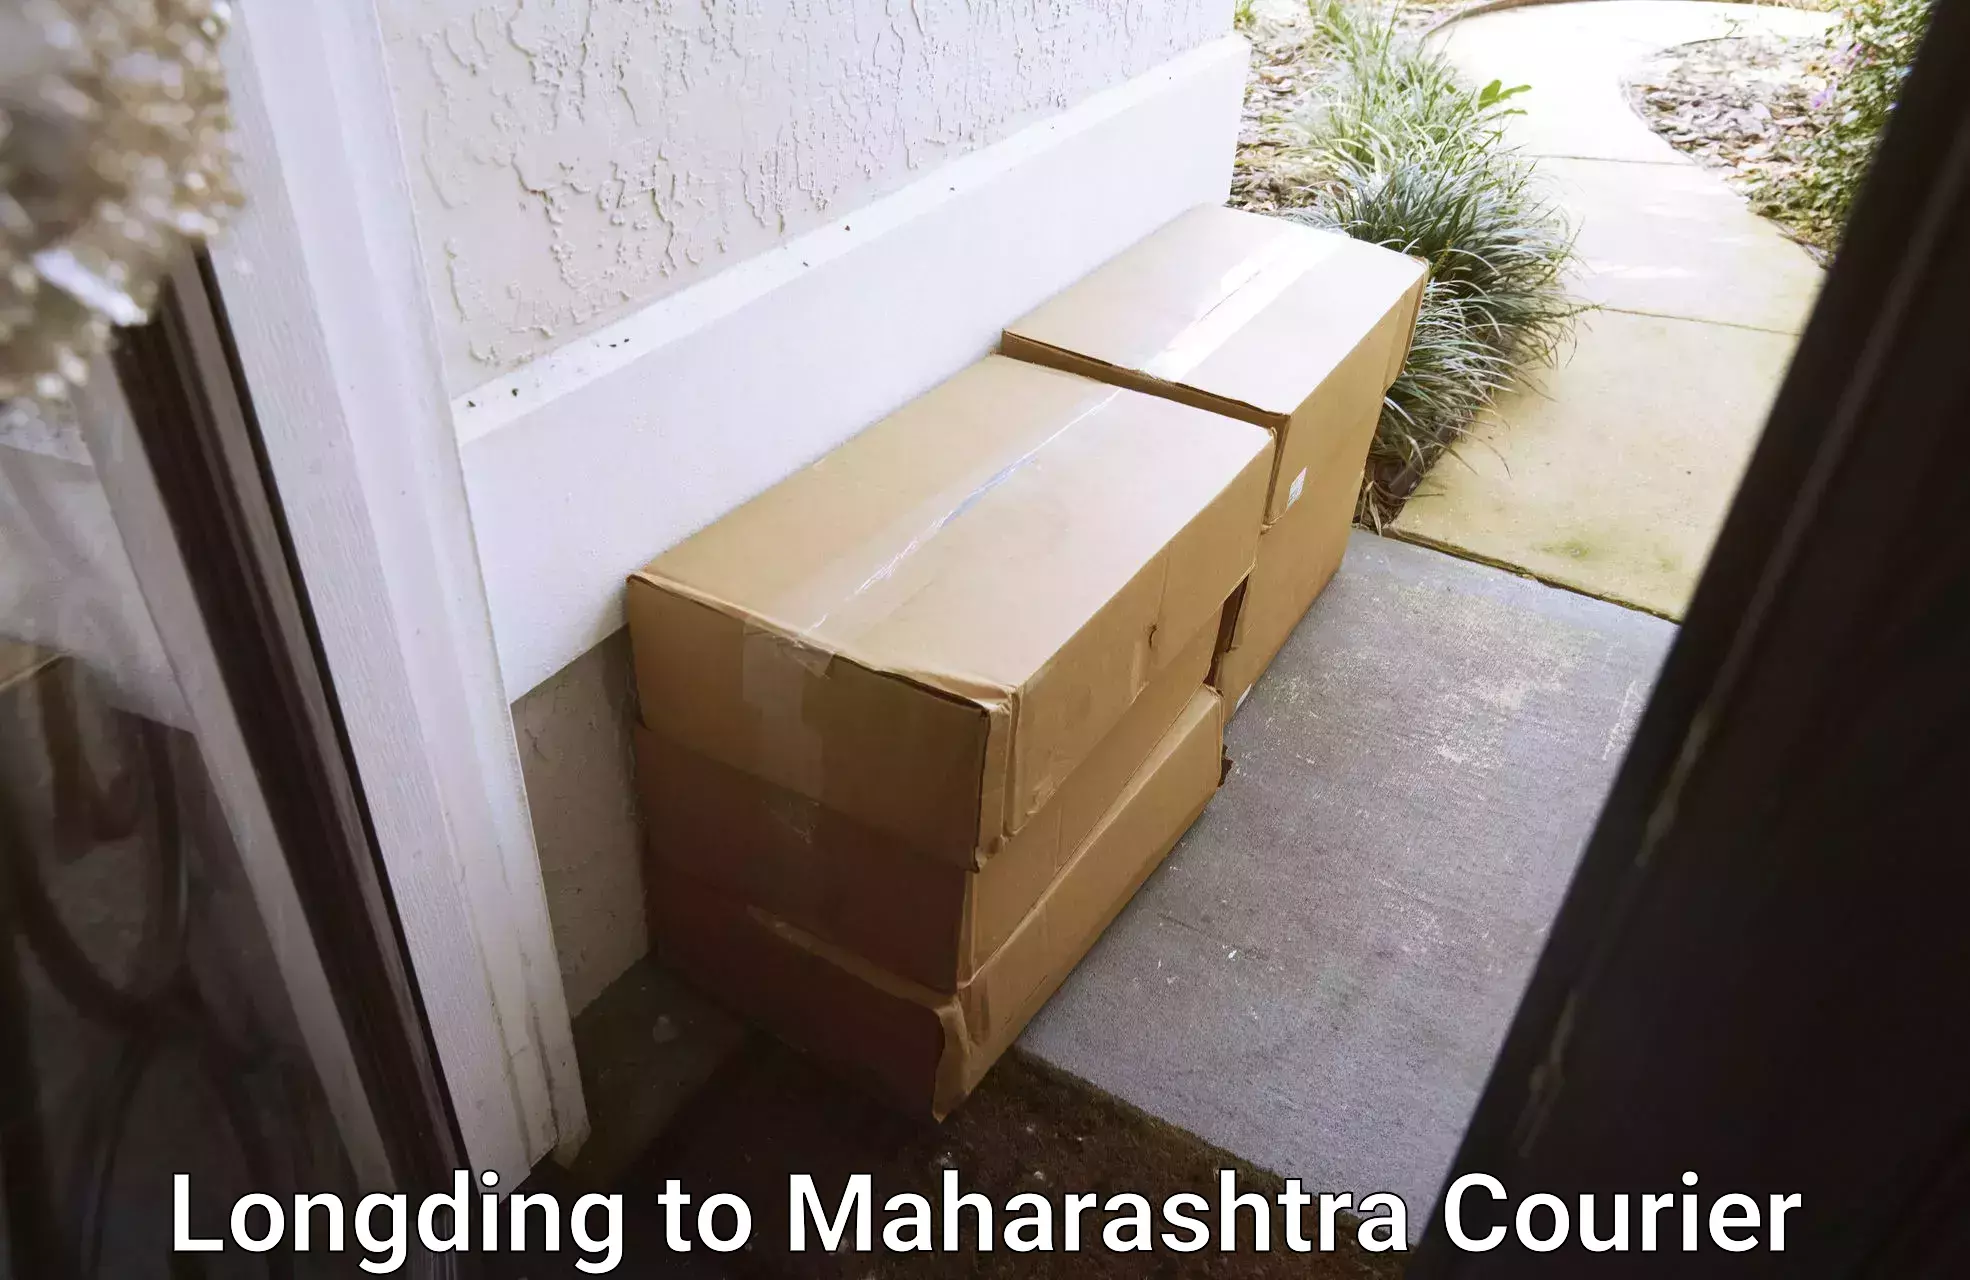 Express delivery capabilities Longding to Maharashtra